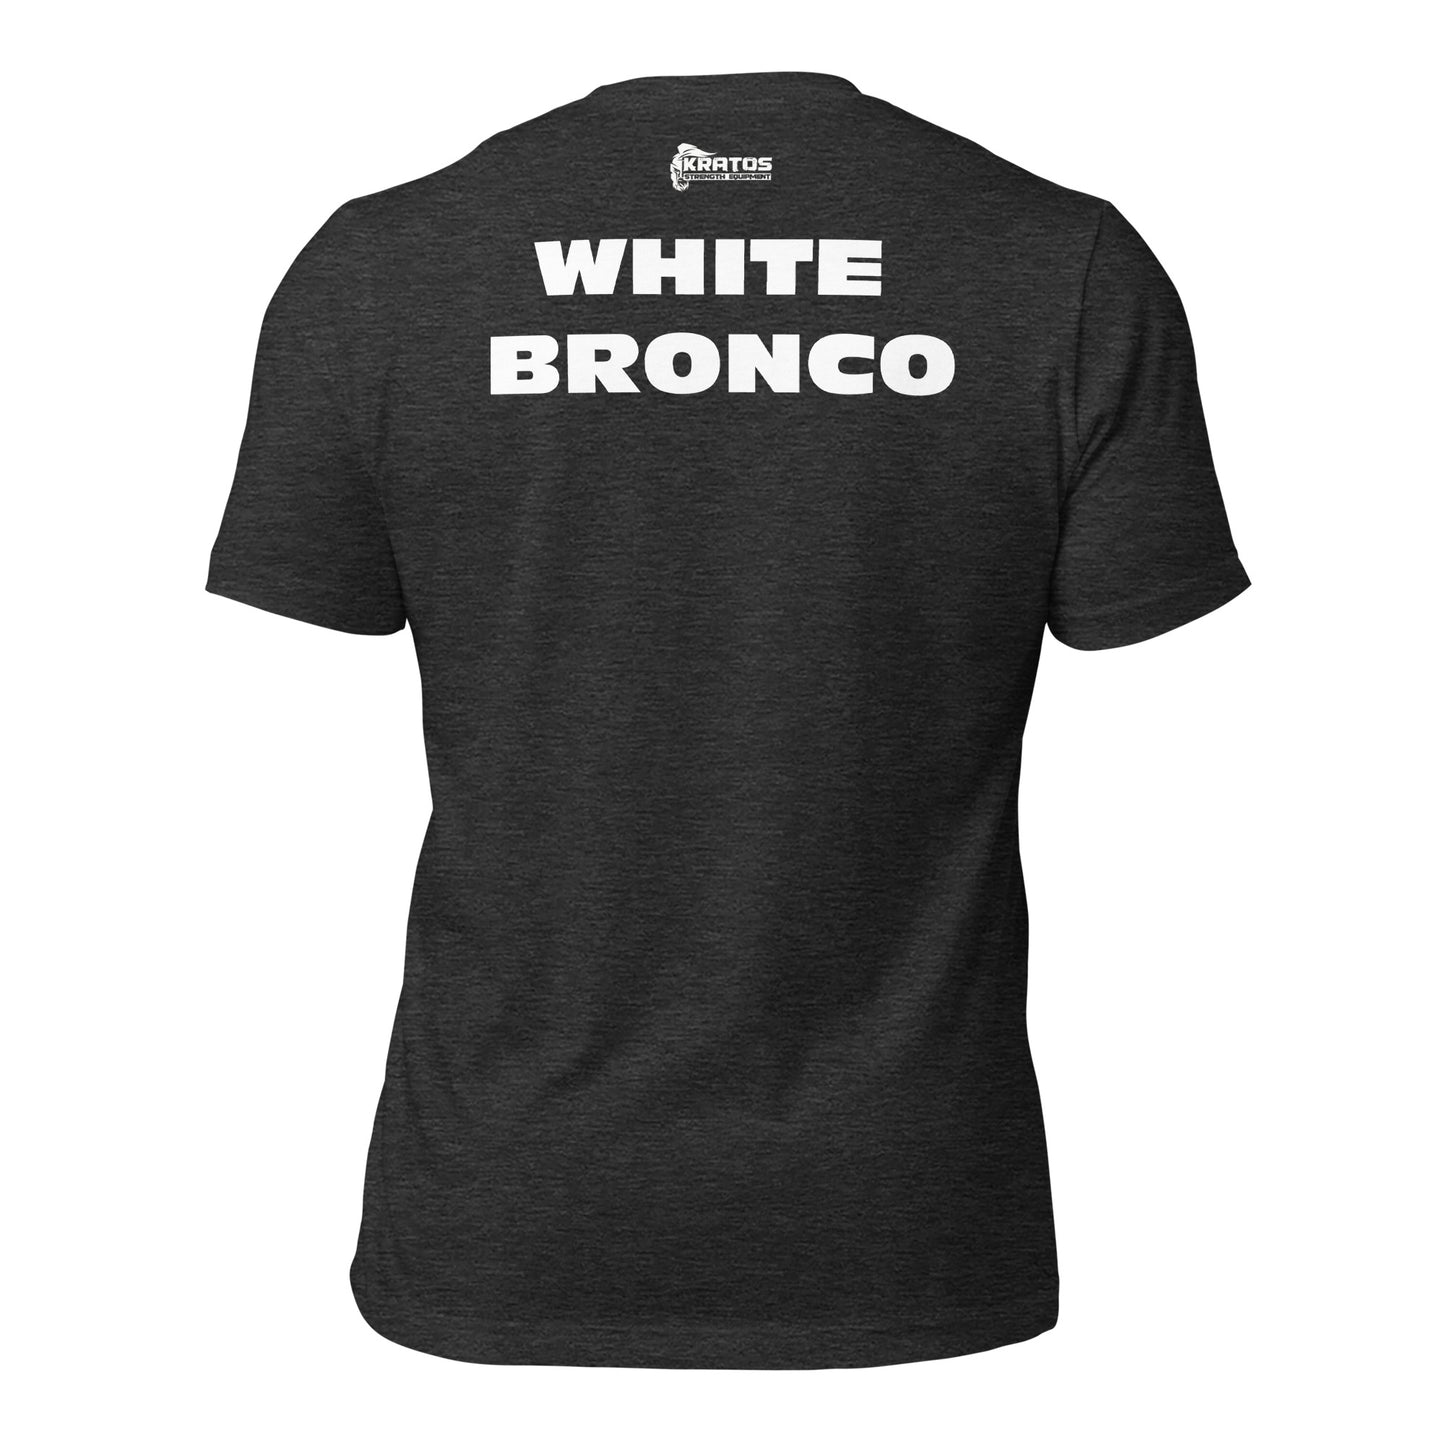 WHITE BRONCO Unisex t-shirt